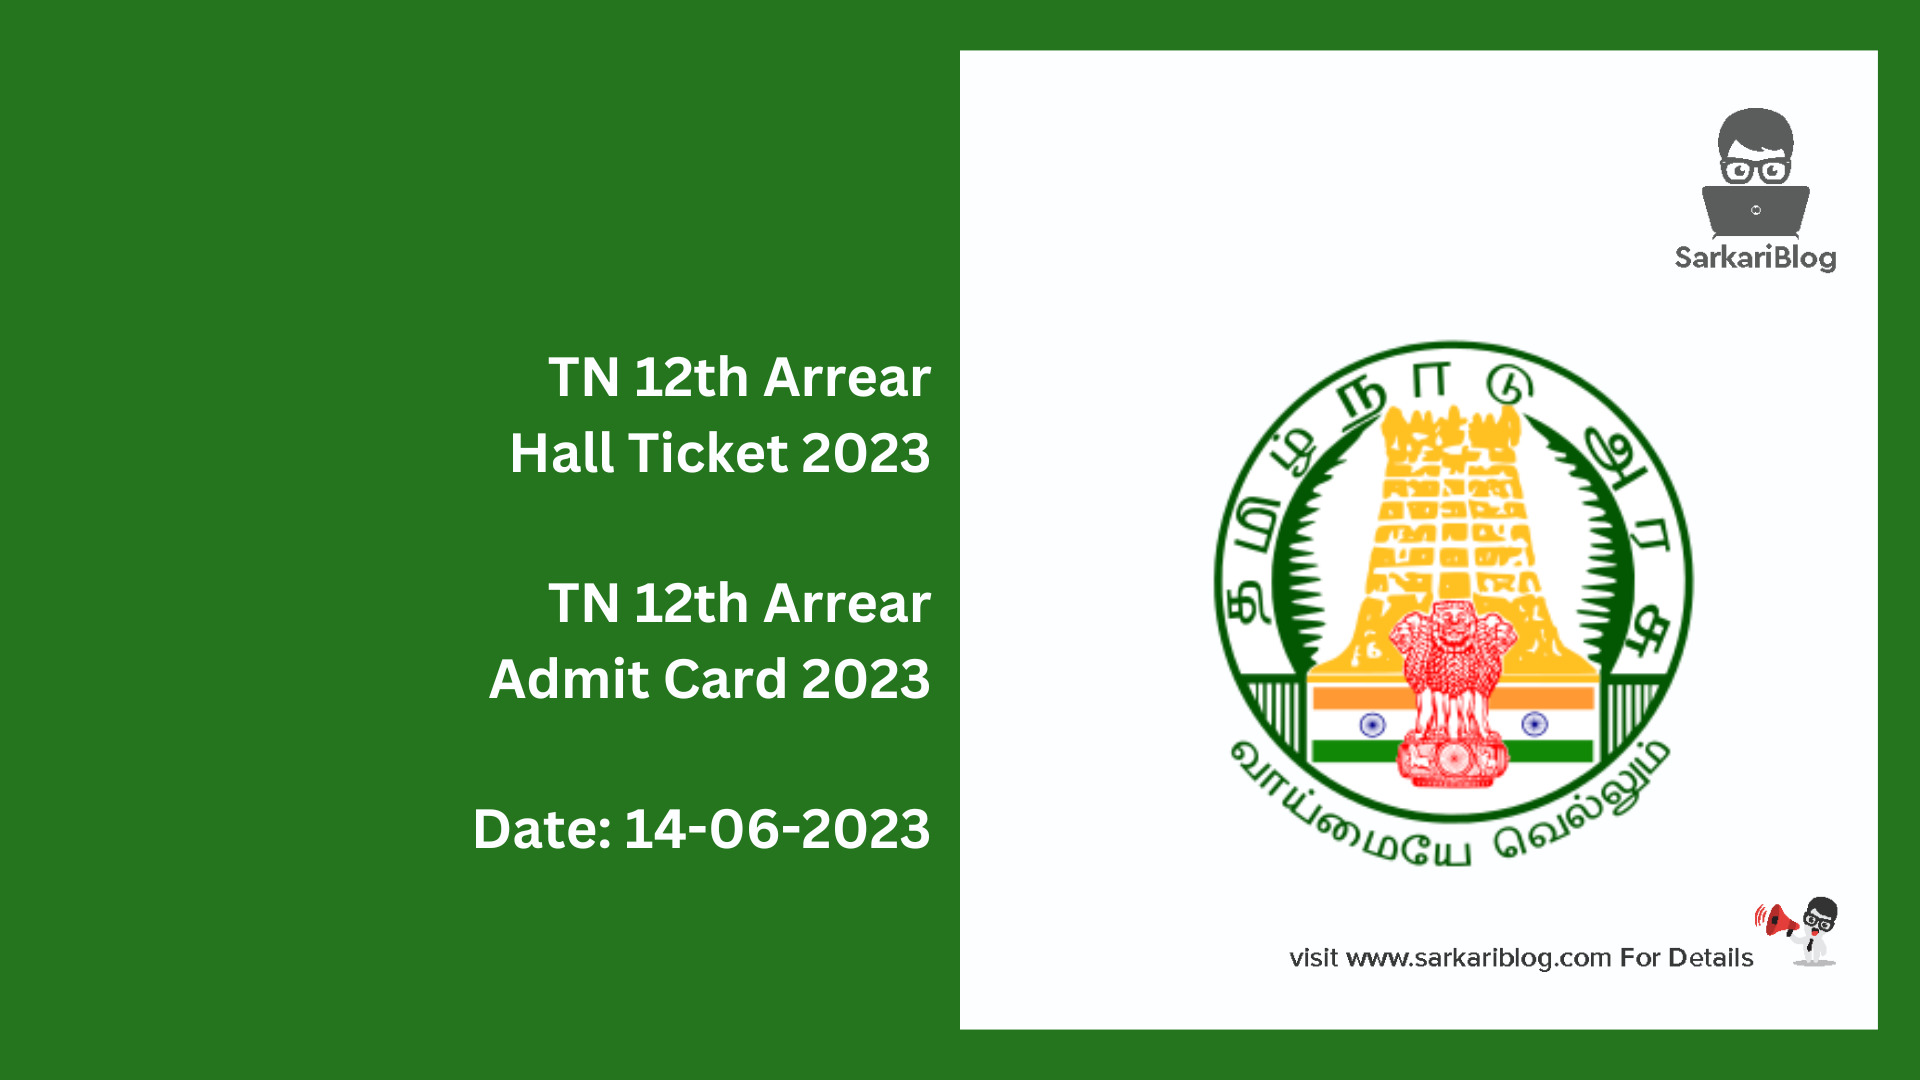 TN 12th Arrear Hall Ticket 2023